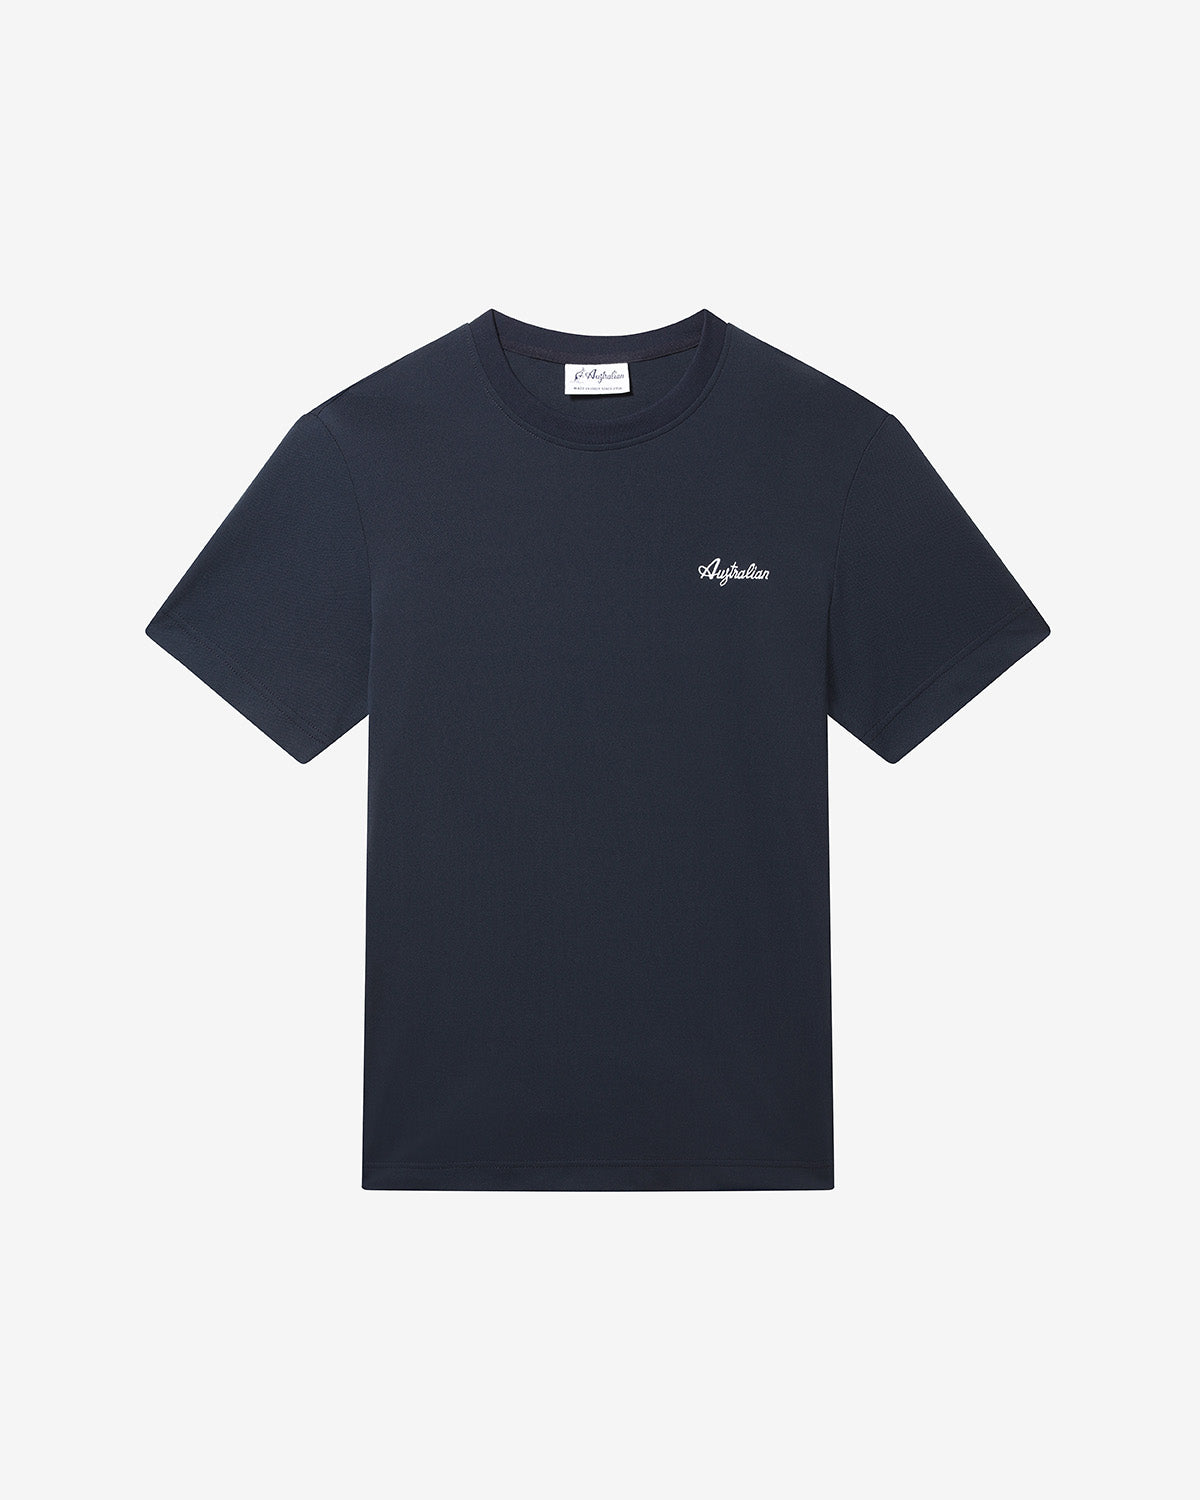 Tech Pique T-Shirt: Australian Sportswear